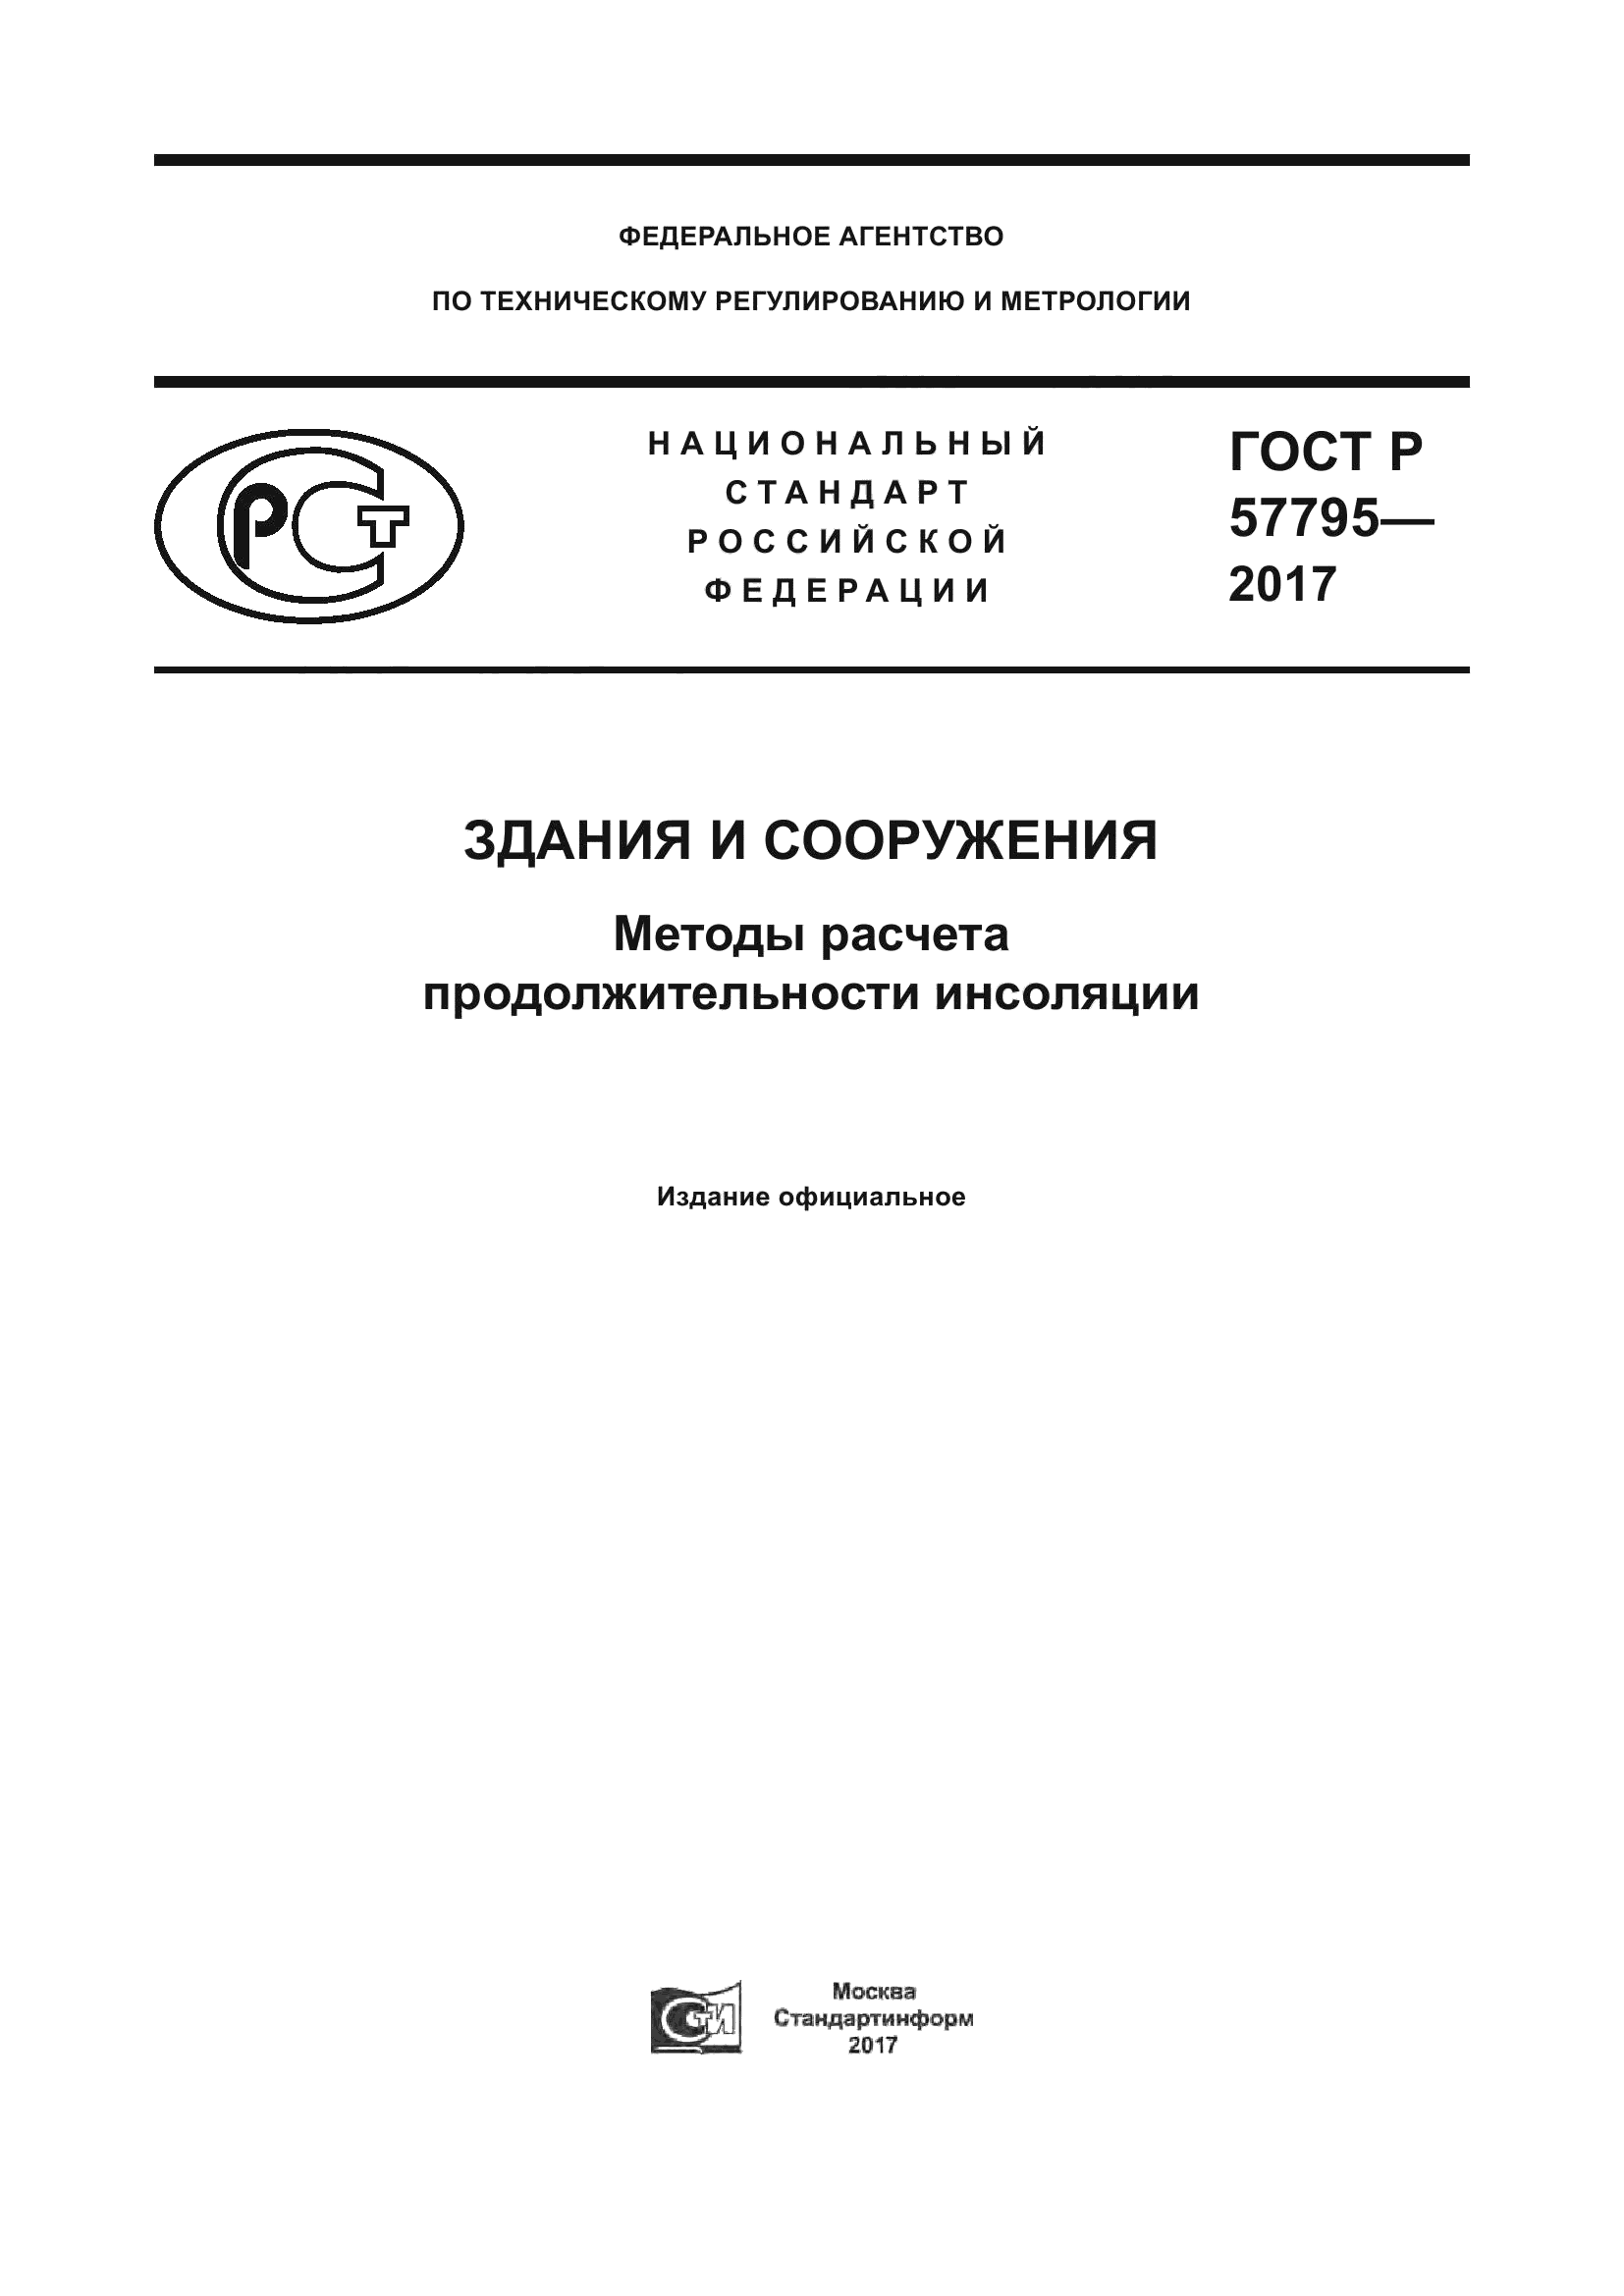 ГОСТ Р 57795-2017